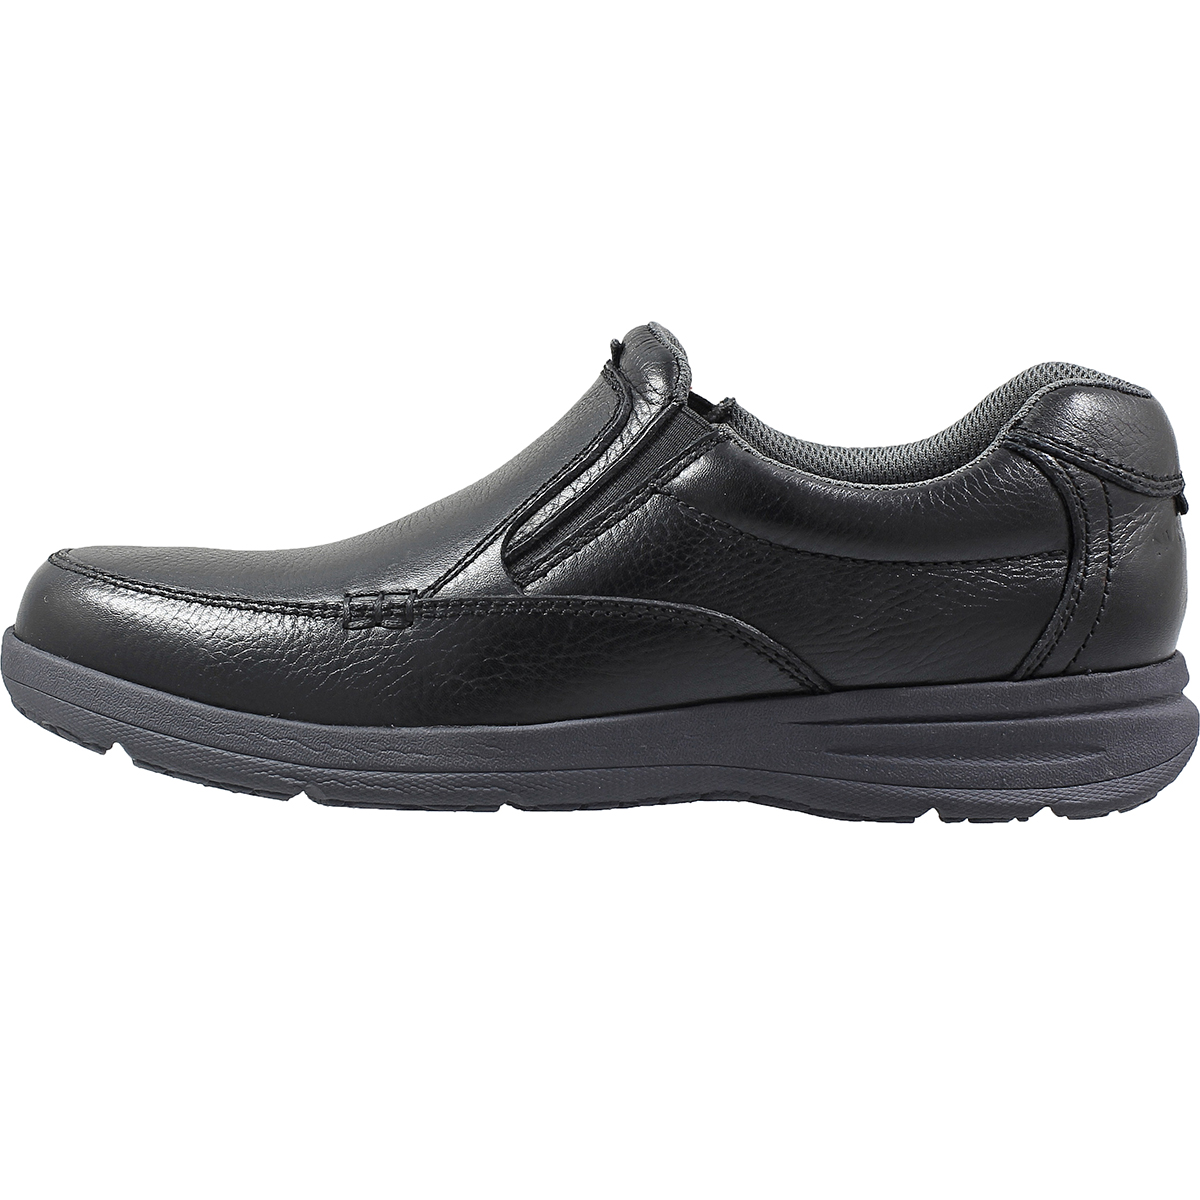 Nunn Bush Men's Cam Moc Toe Slip-On Shoes, Wide - Black, 11.5